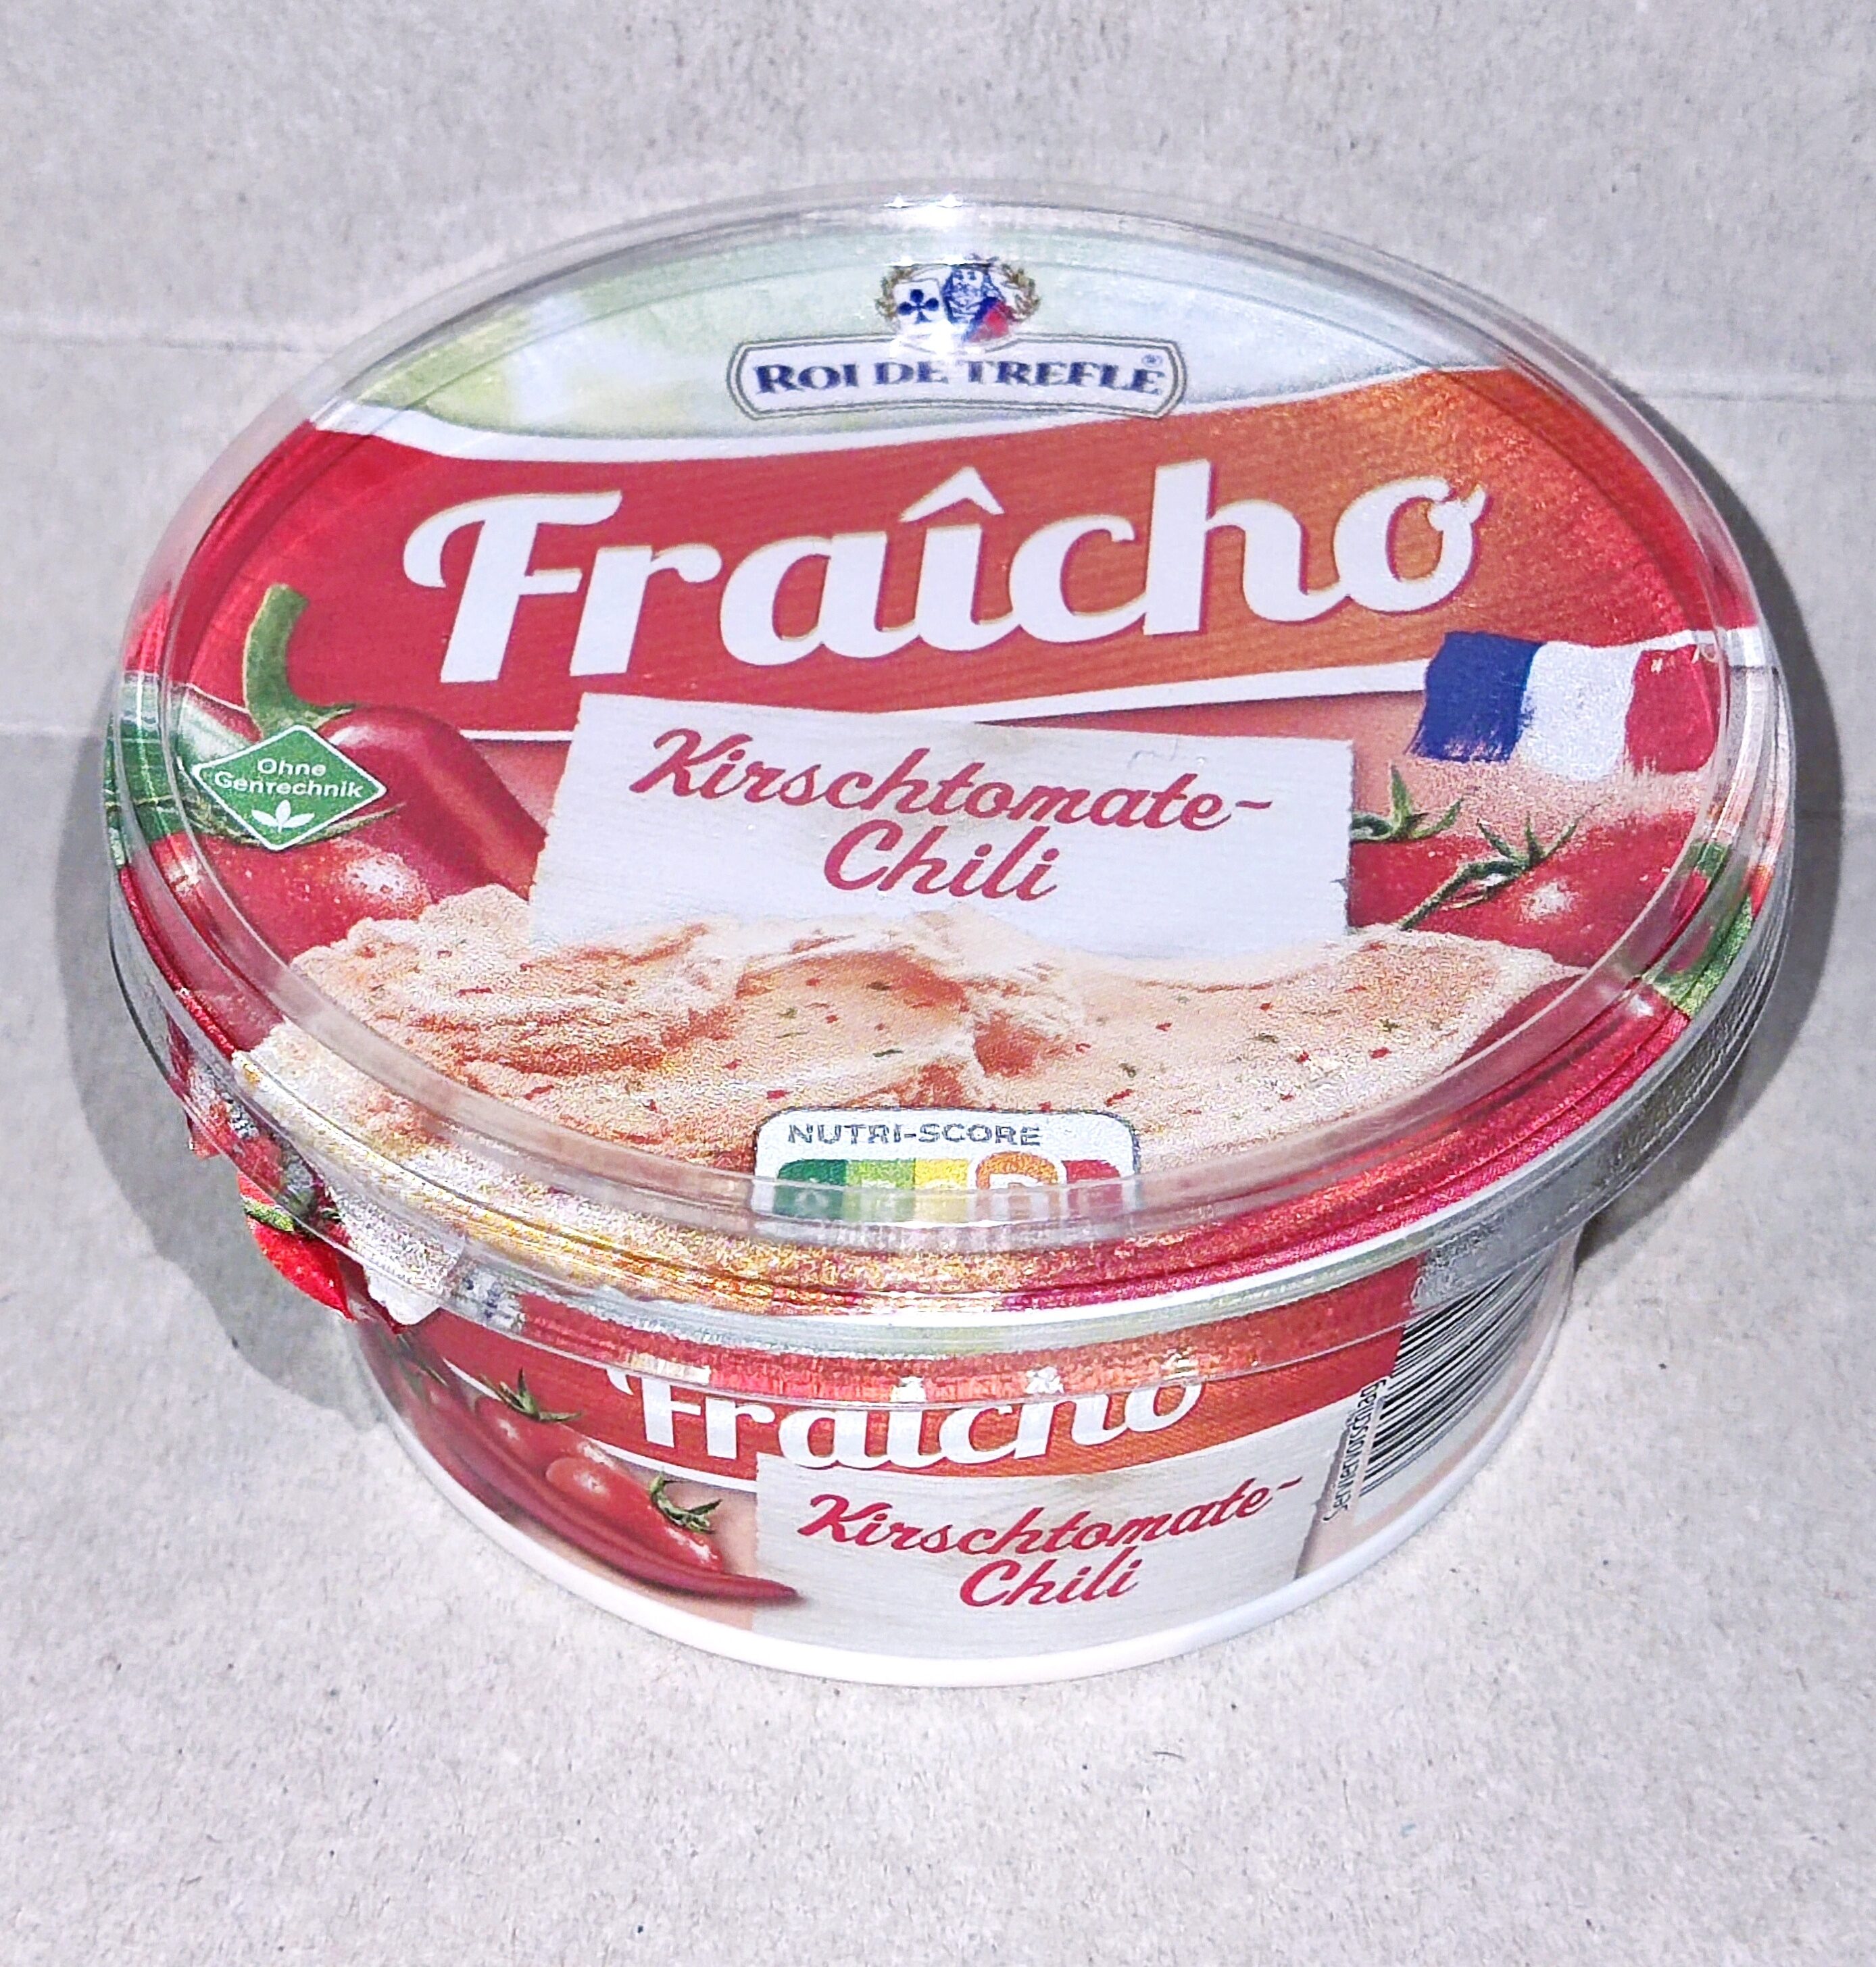 Fraîcho - Kirschtomate-Chili - Produkt